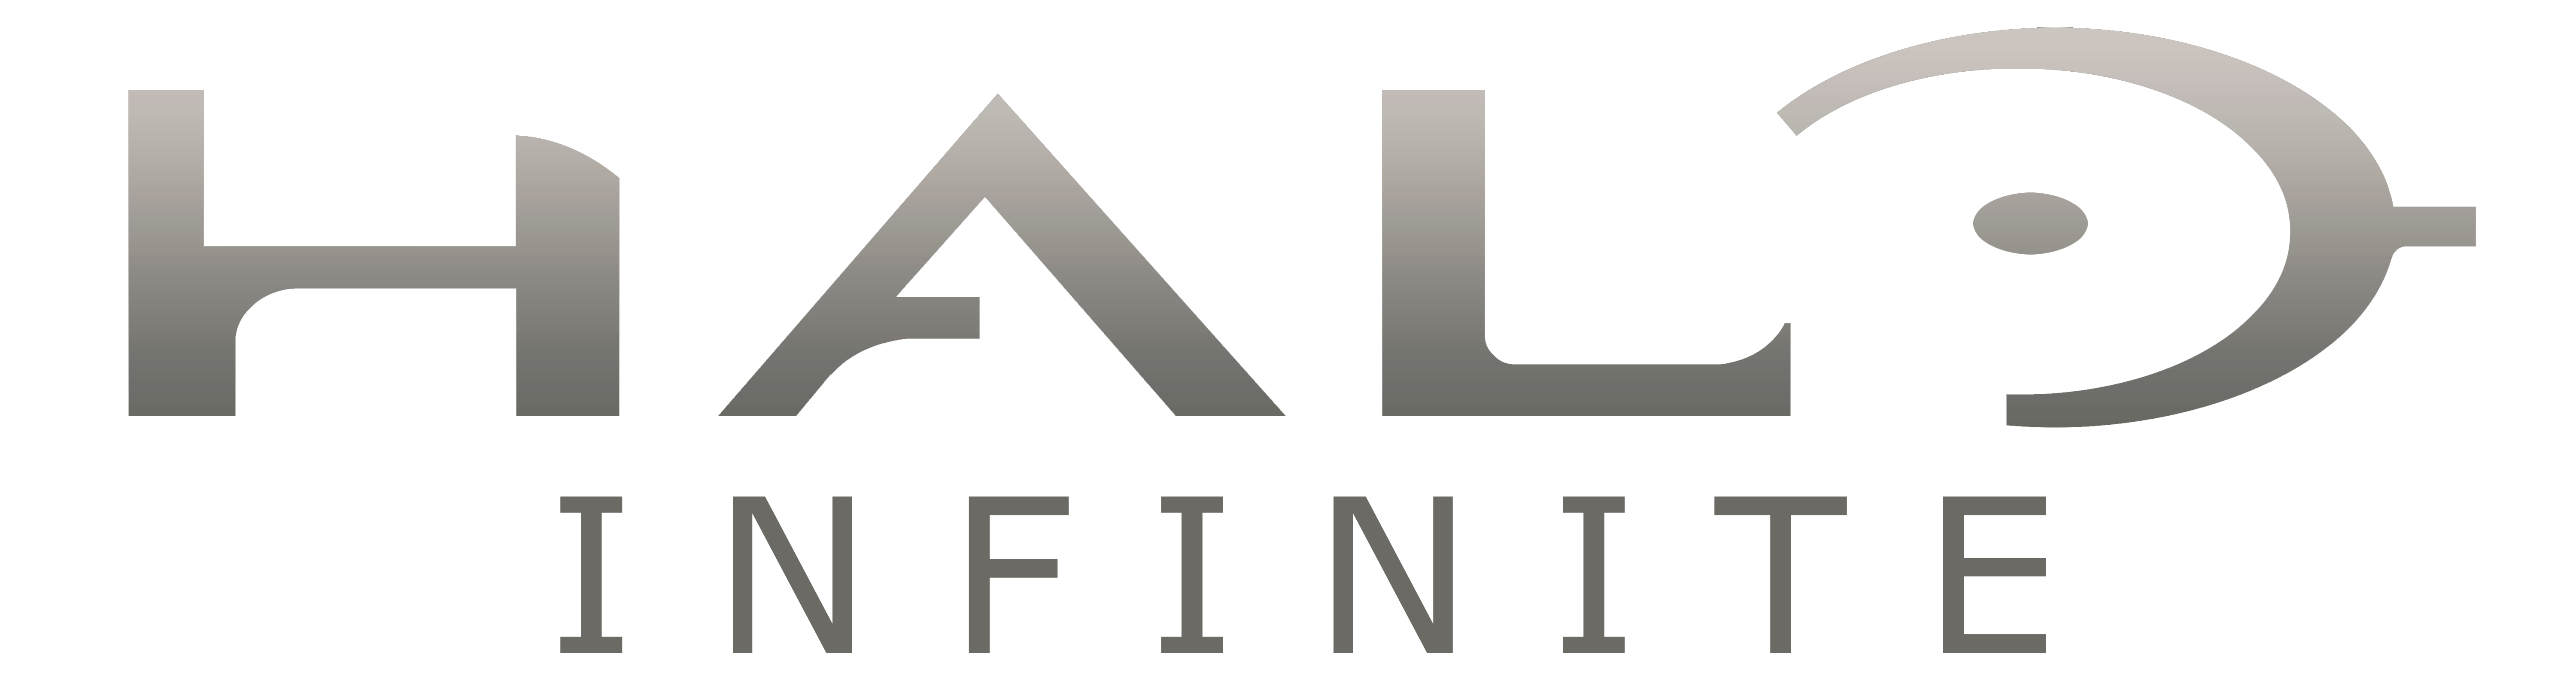 Halo Infinite Logo PNG Bild